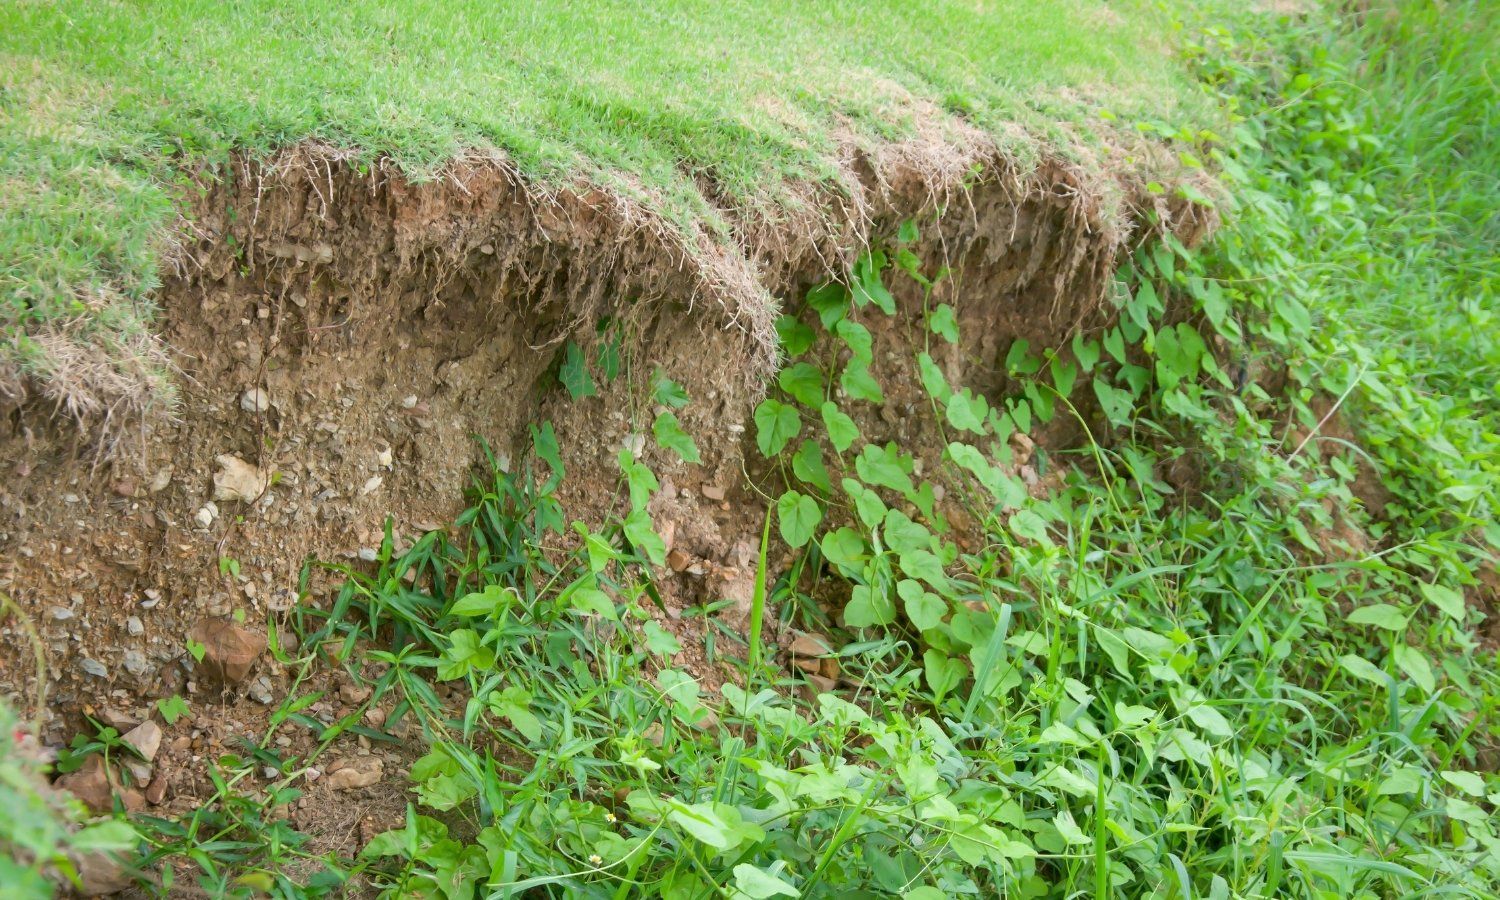 Importance of erosion control